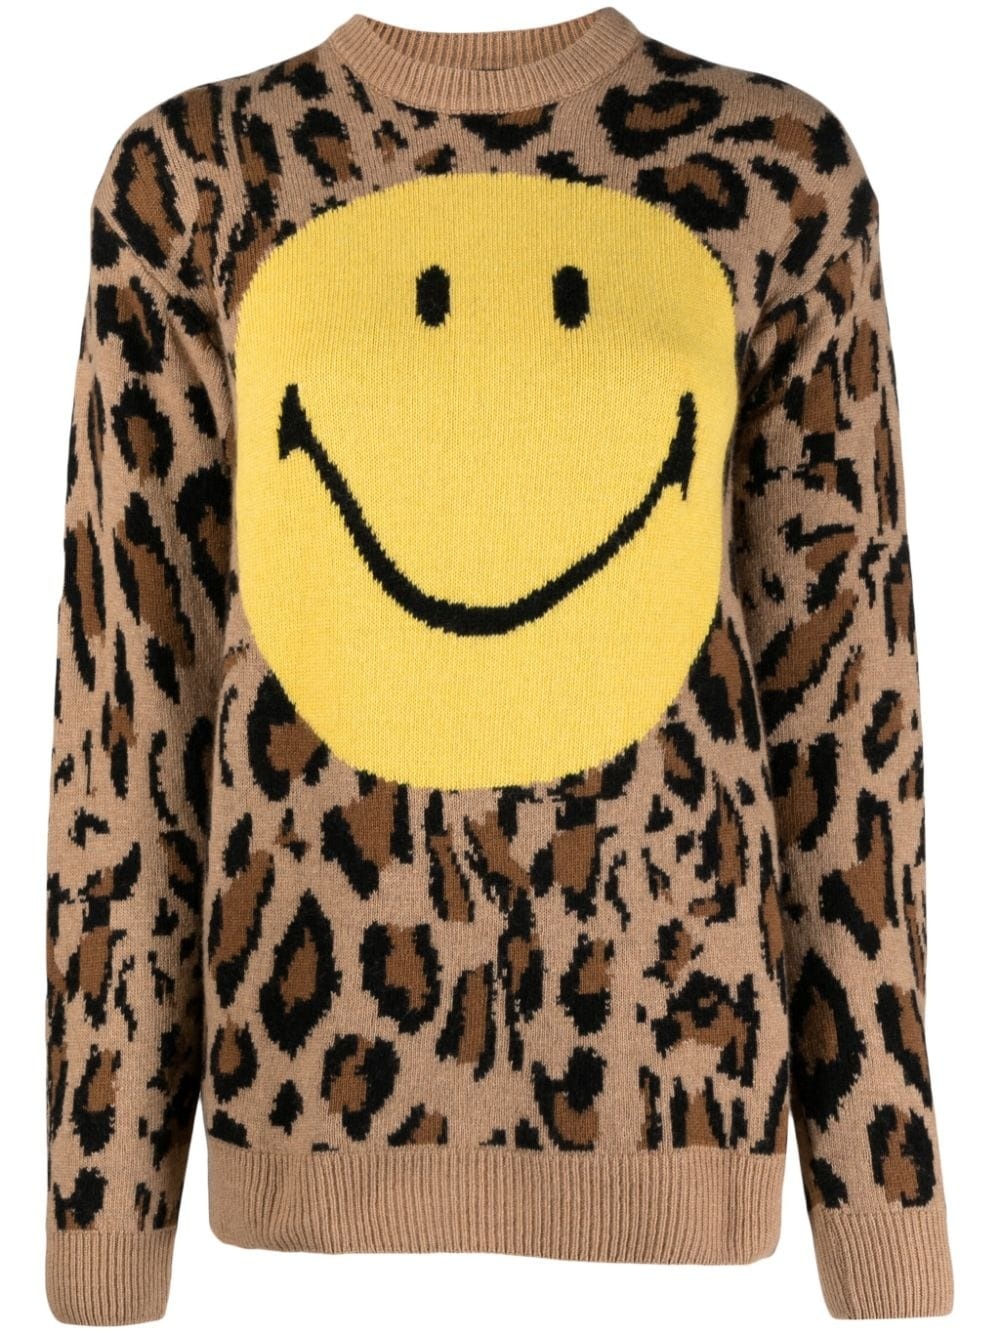 smiley-face anima-pattern jumper - 1